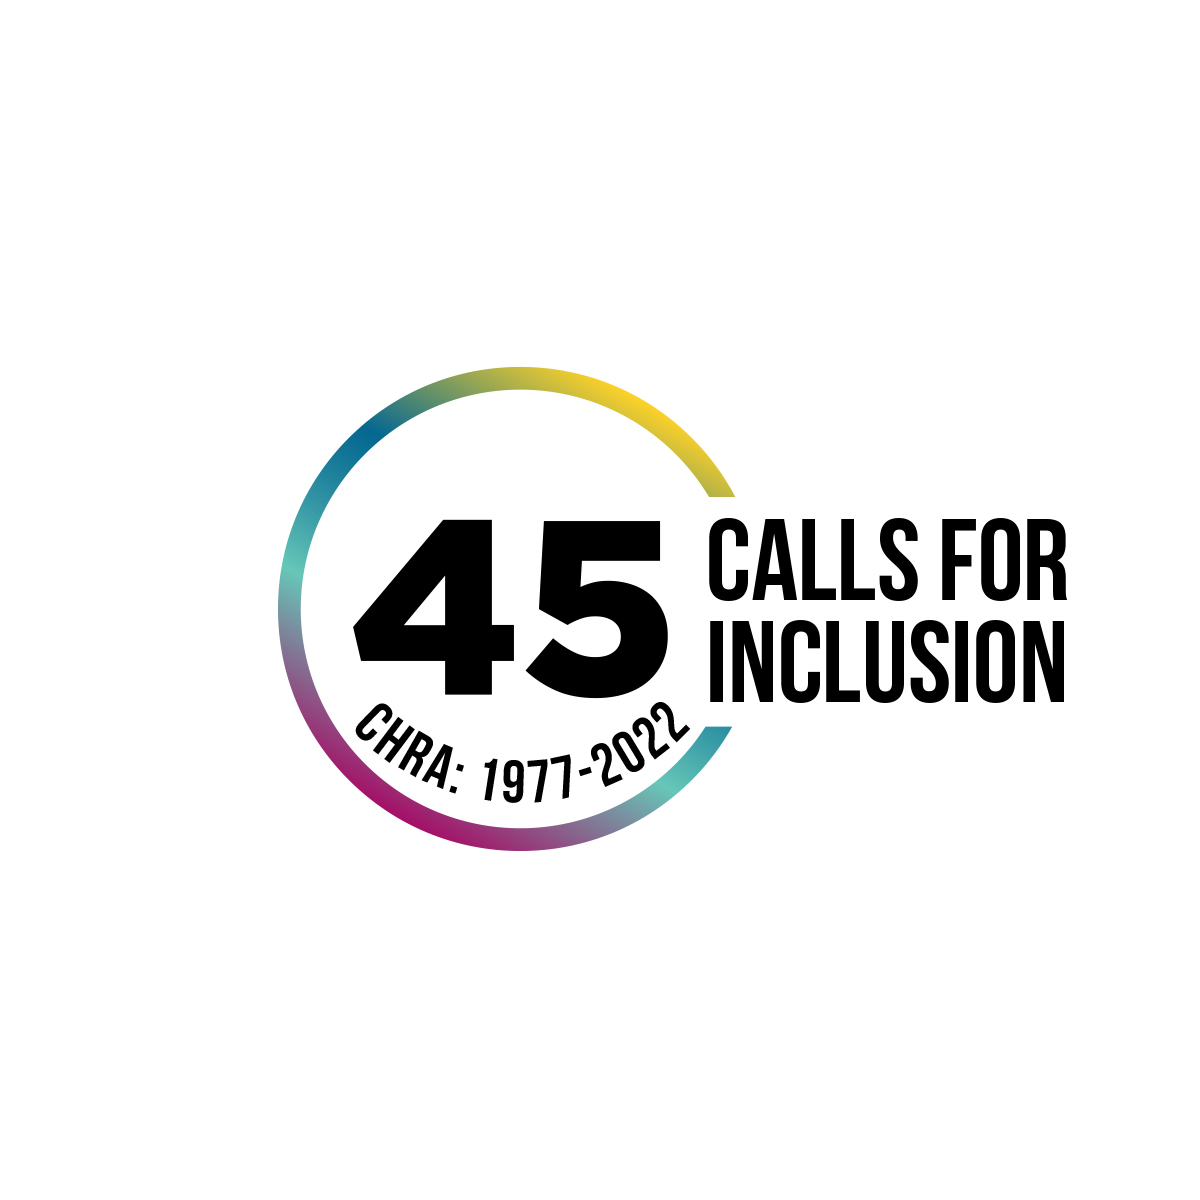 45 Calls for Inclusion